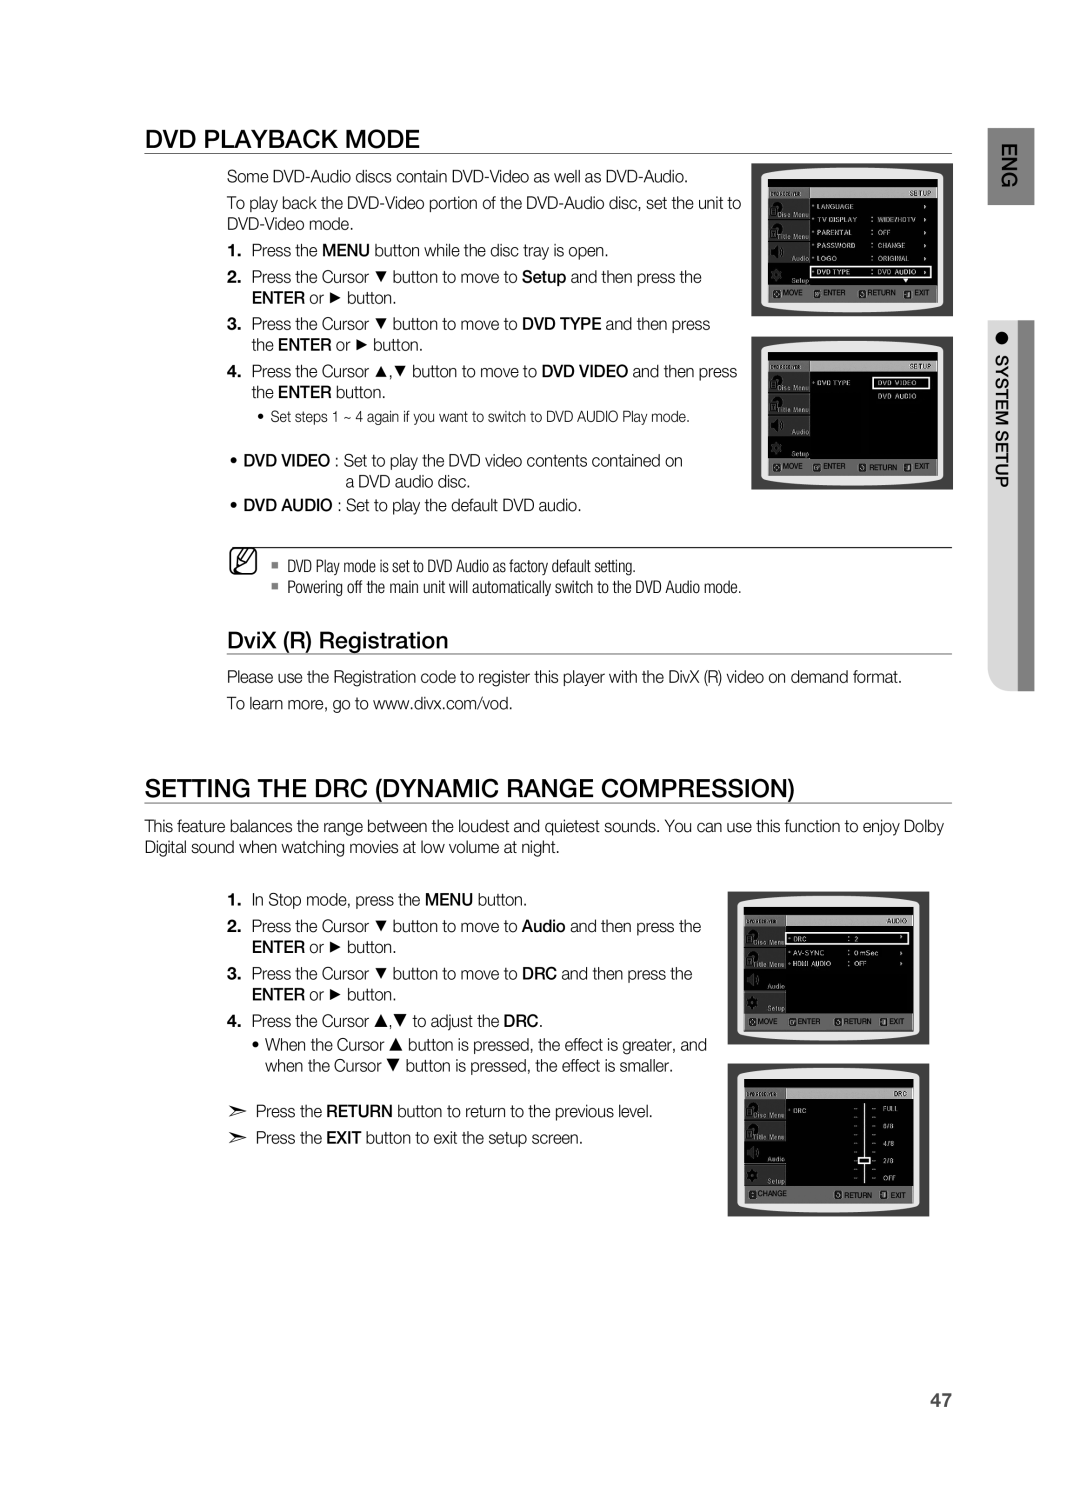 Sony HT-X810 user manual DVD Playback Mode, Setting the DRC Dynamic Range Compression, DviX R Registration 